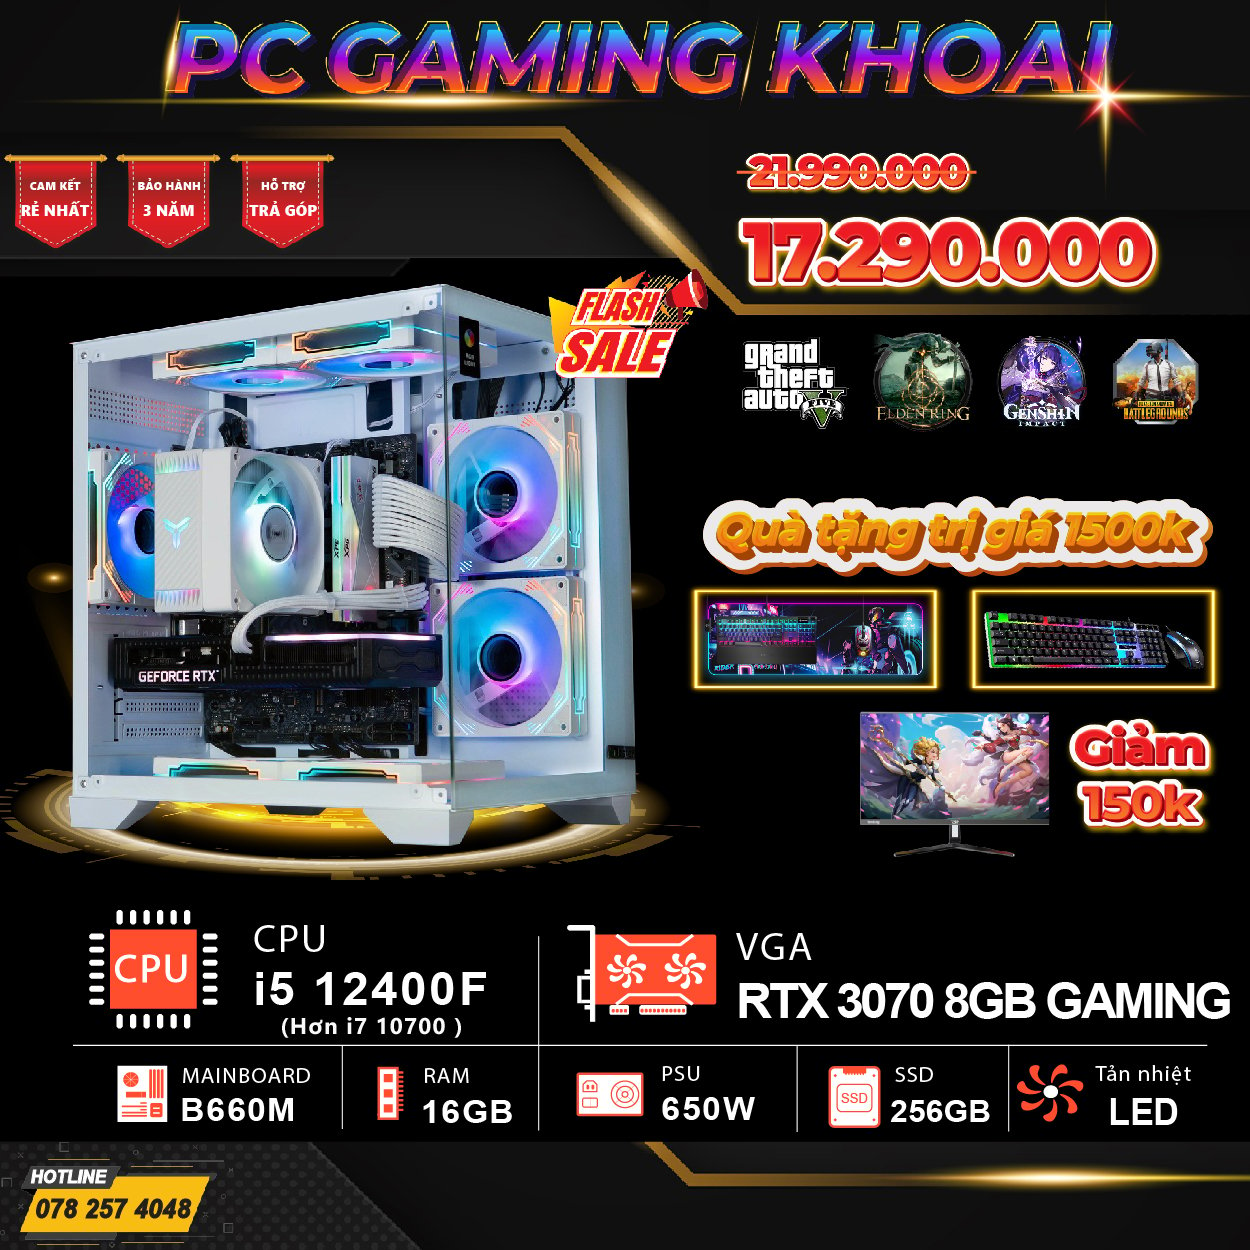 PC GAMING KHOAI